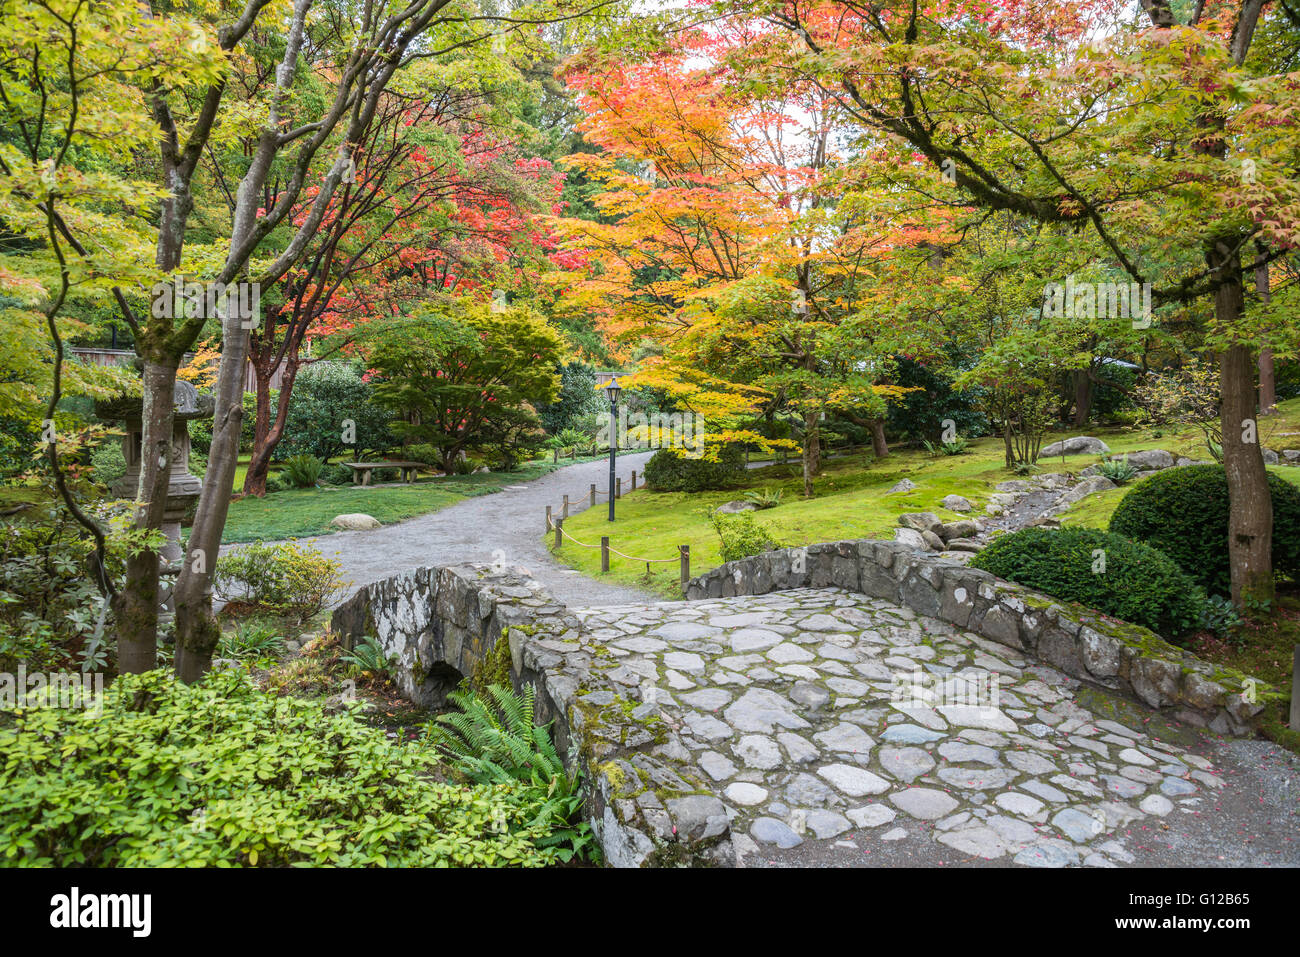 Stone Bridge And Fall Foliage In Seattle Japanese Garden Stock